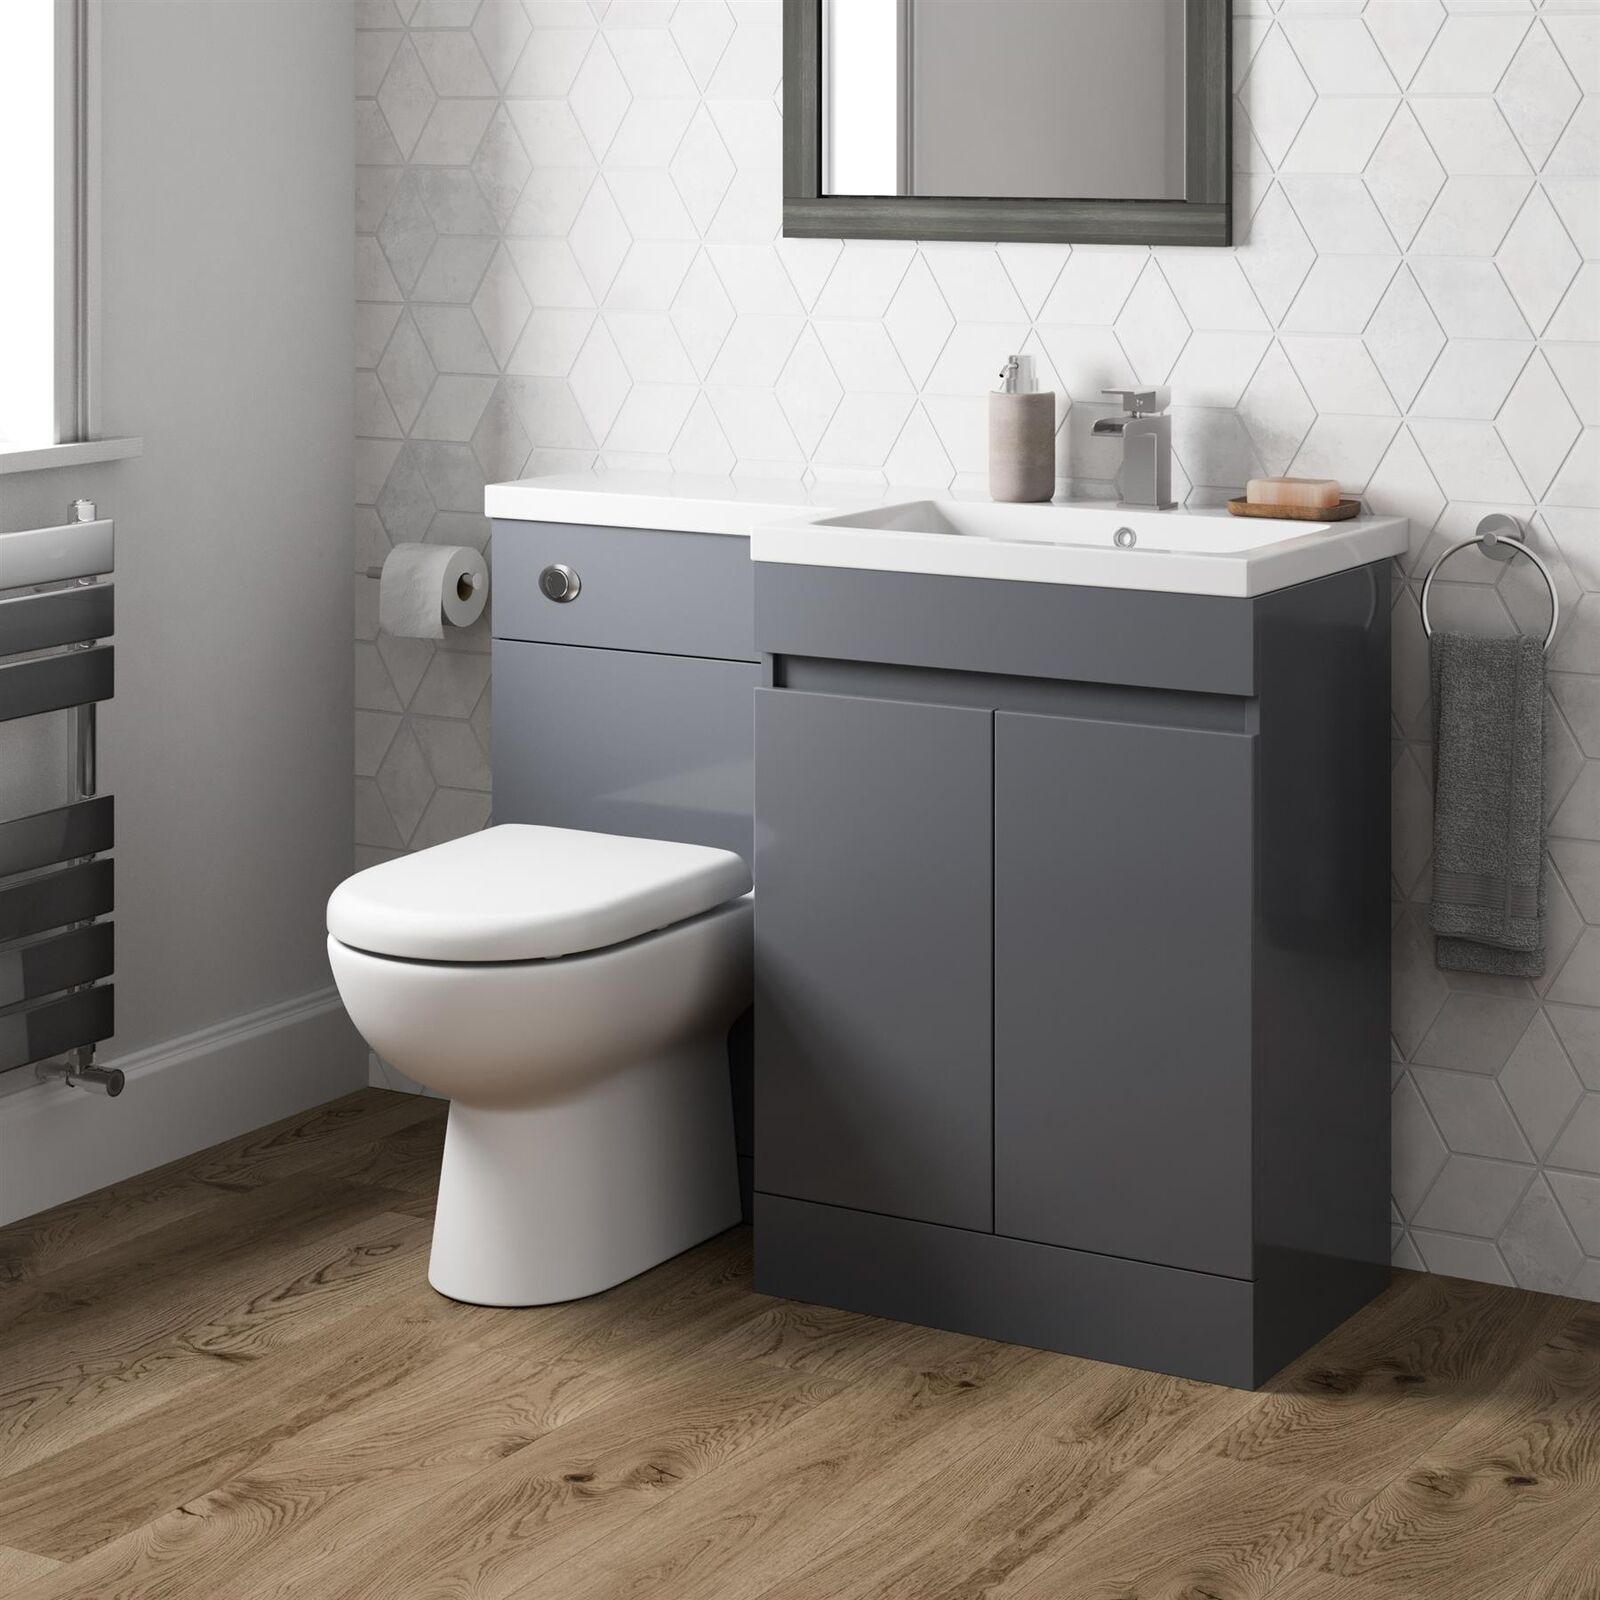 toilet and sink vanity unit ebay Vanity unit grey combined sinks theskunkpot soak toilets vanities